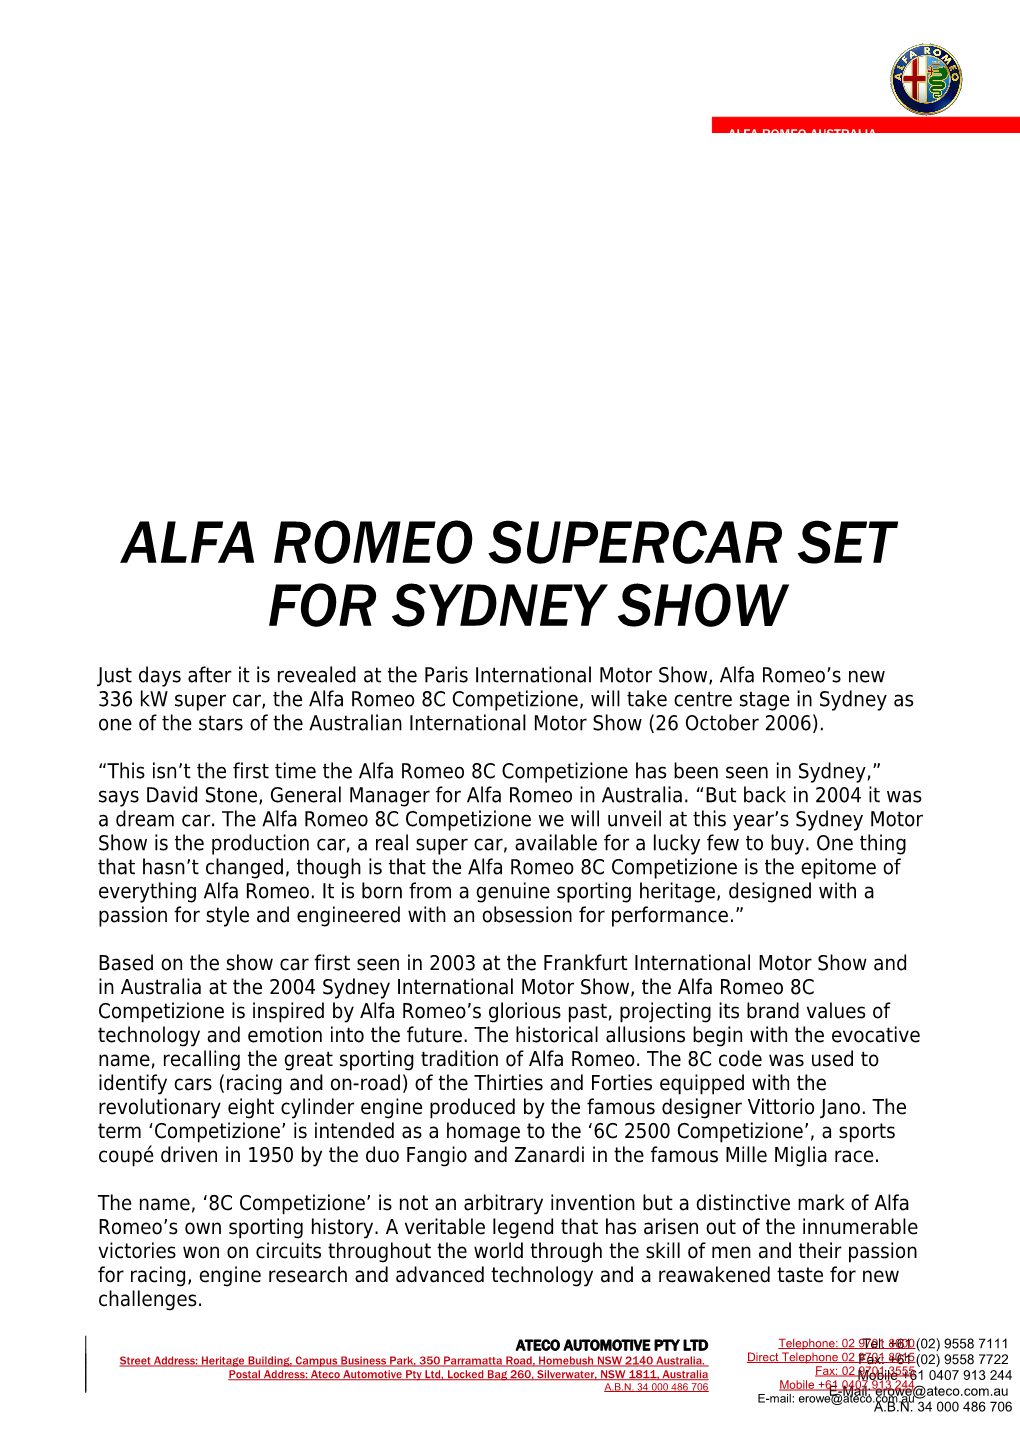 Alfa Romeo Supercar Set for Sydney Show